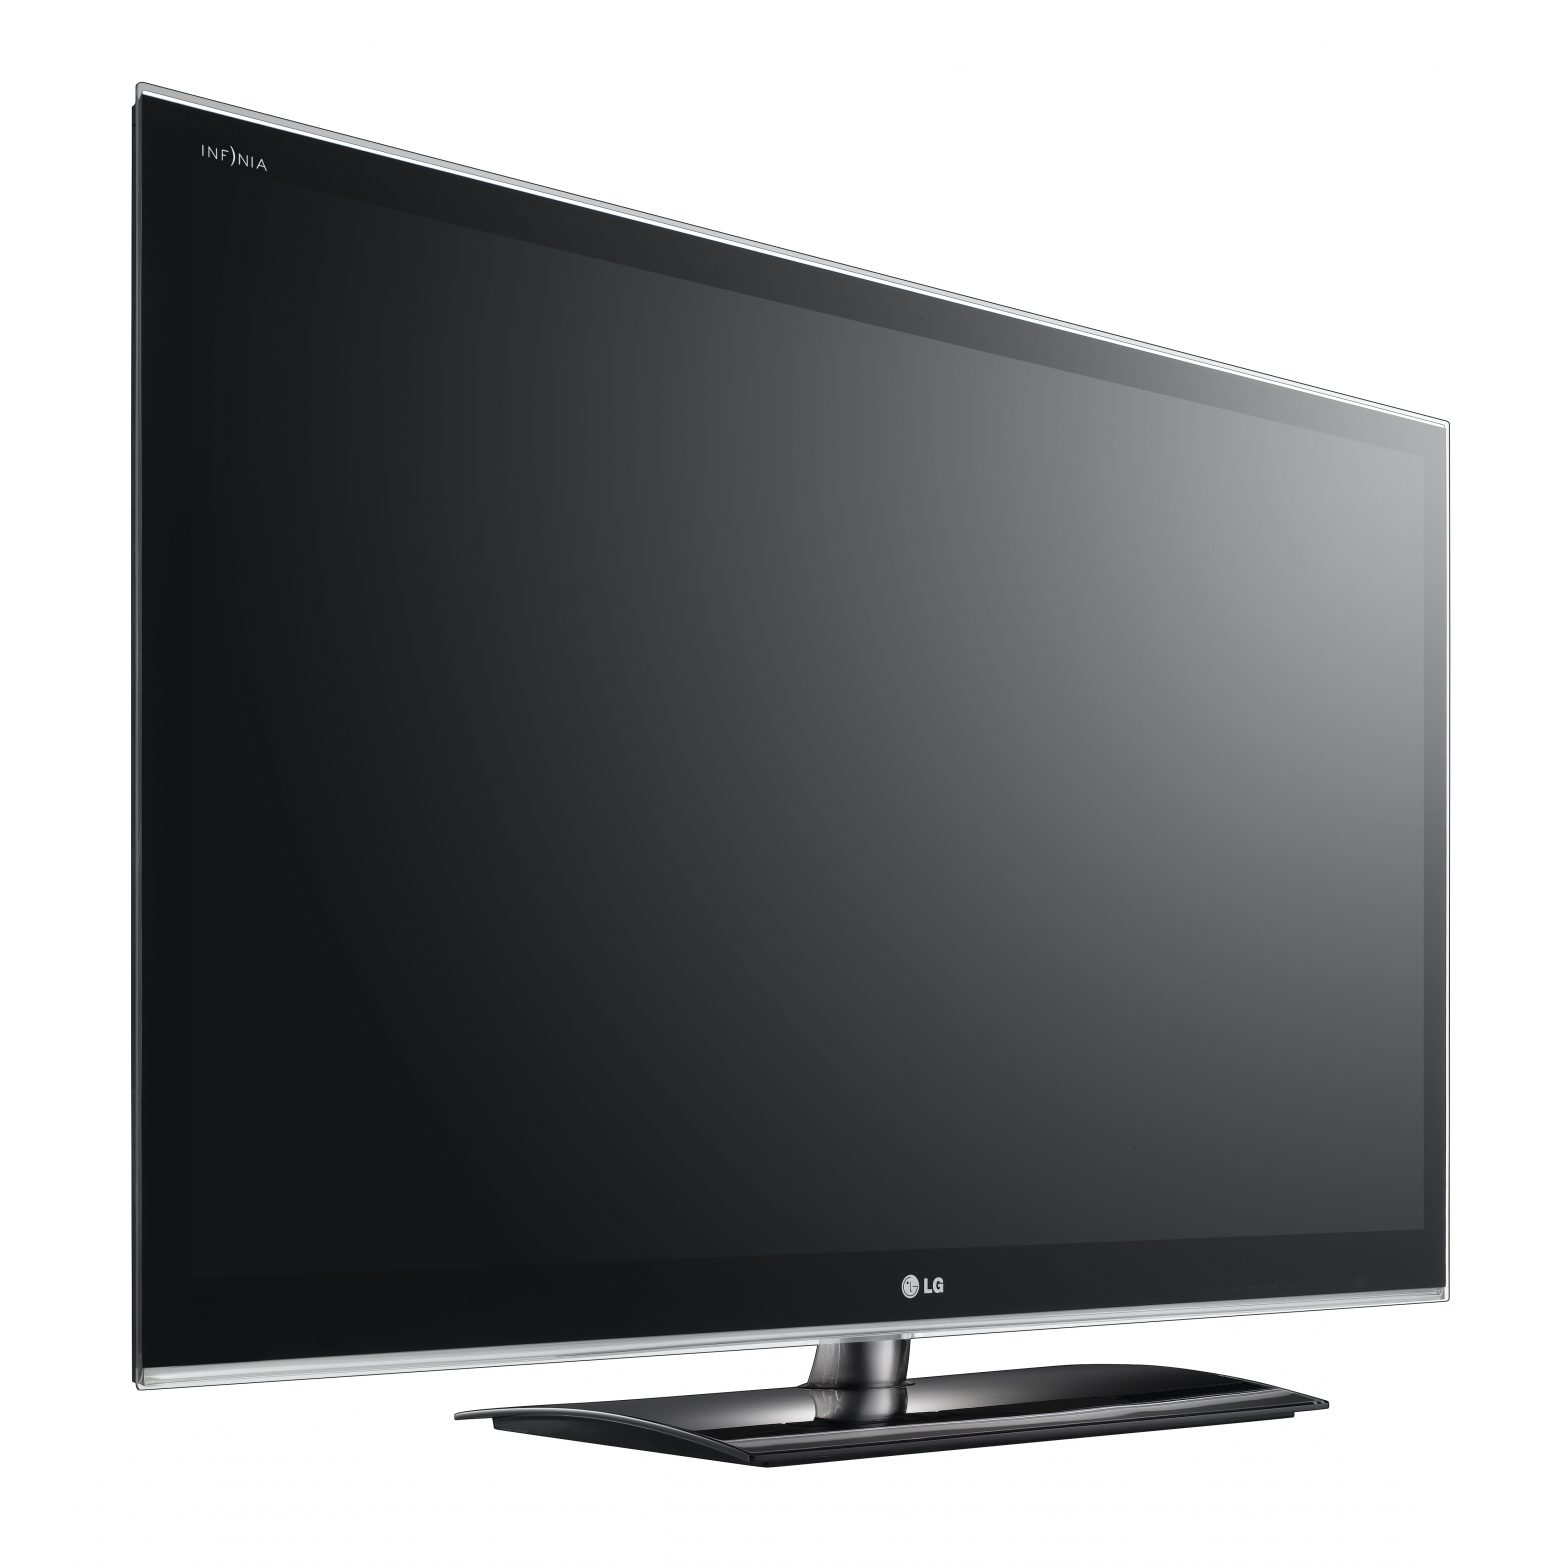 Left-side view of LG Plasma TV model PZ950